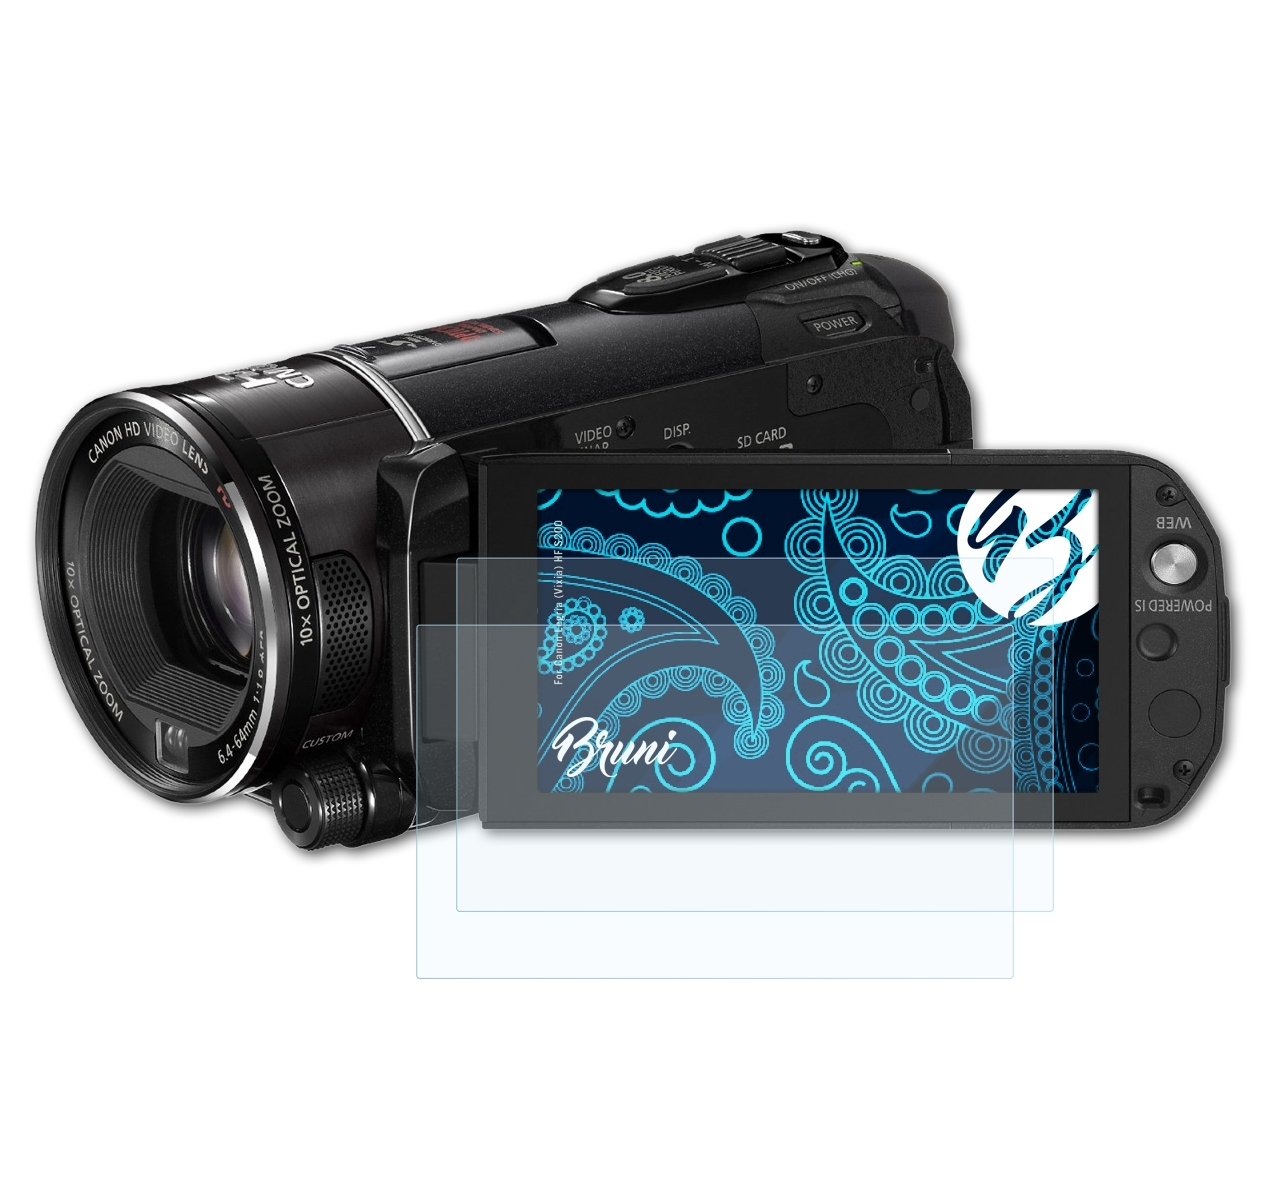 (Vixia) Legria BRUNI Canon 2x Schutzfolie(für HF S200) Basics-Clear